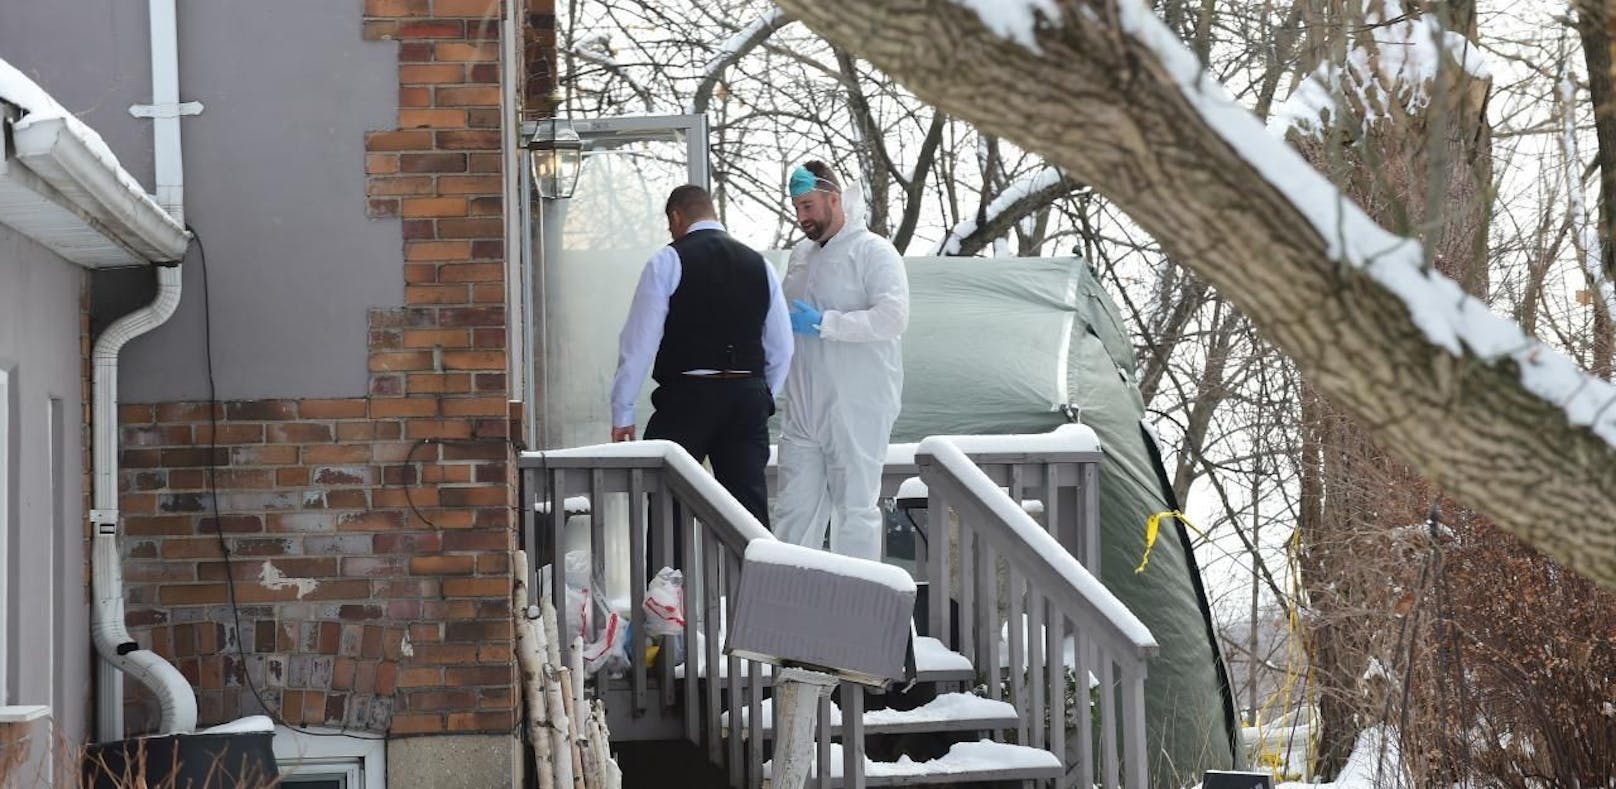 Toronto-Serienkiller gesteht acht Morde